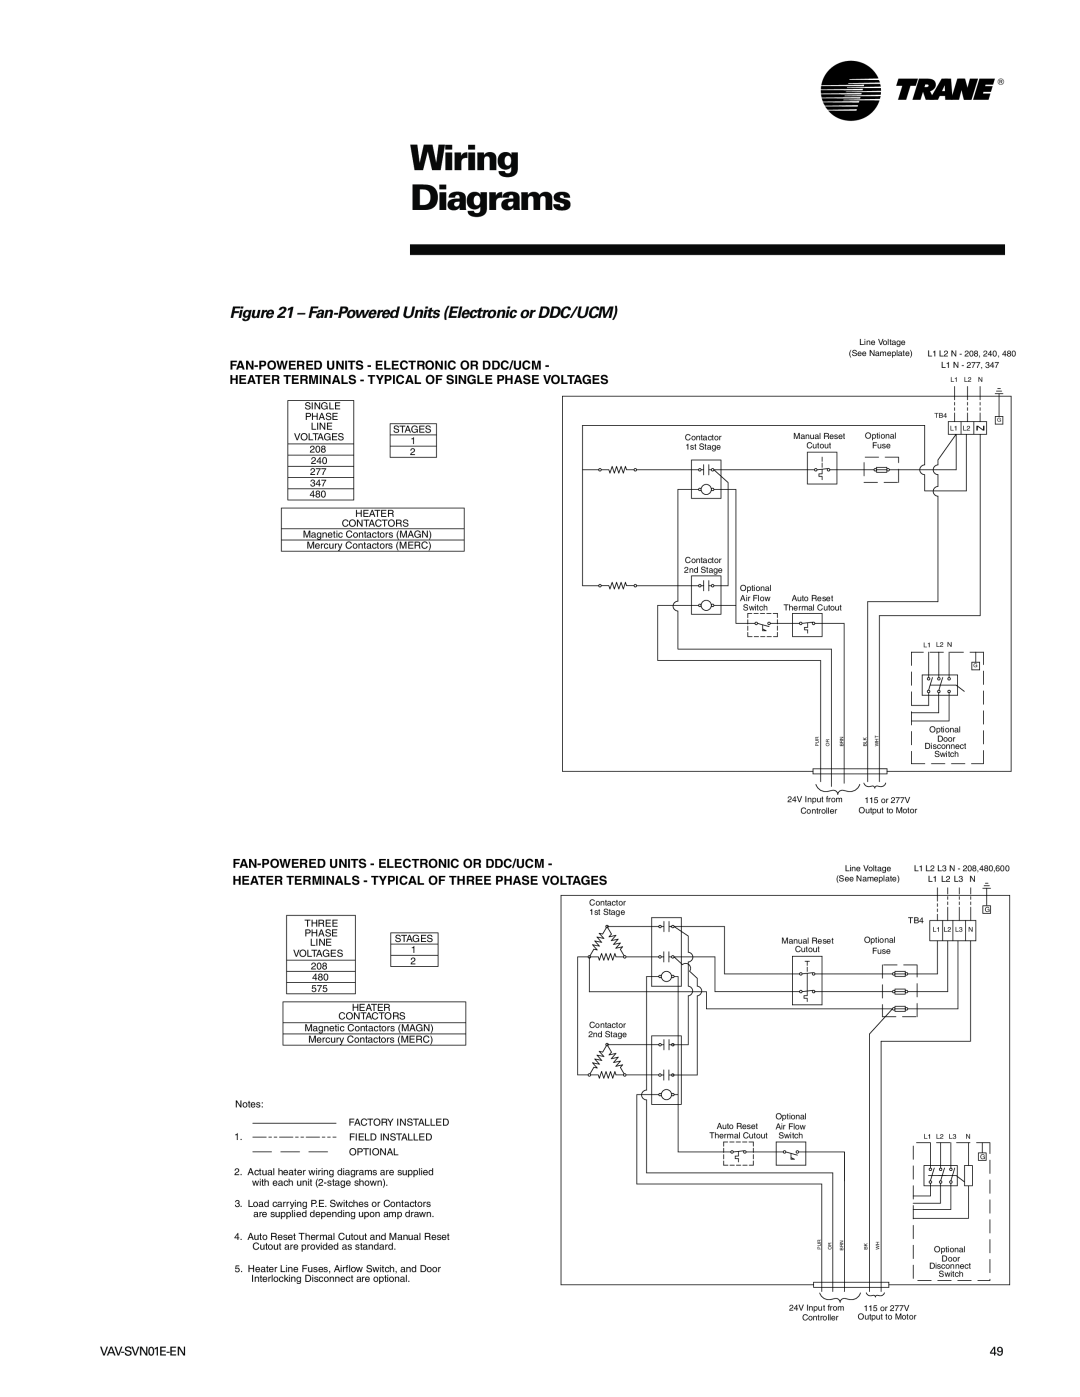 Trane Trane, VAV-SVN01E-EN manual Wiring Diagrams, Fan-Poweredunits - Electronic Or Ddc/Ucm 